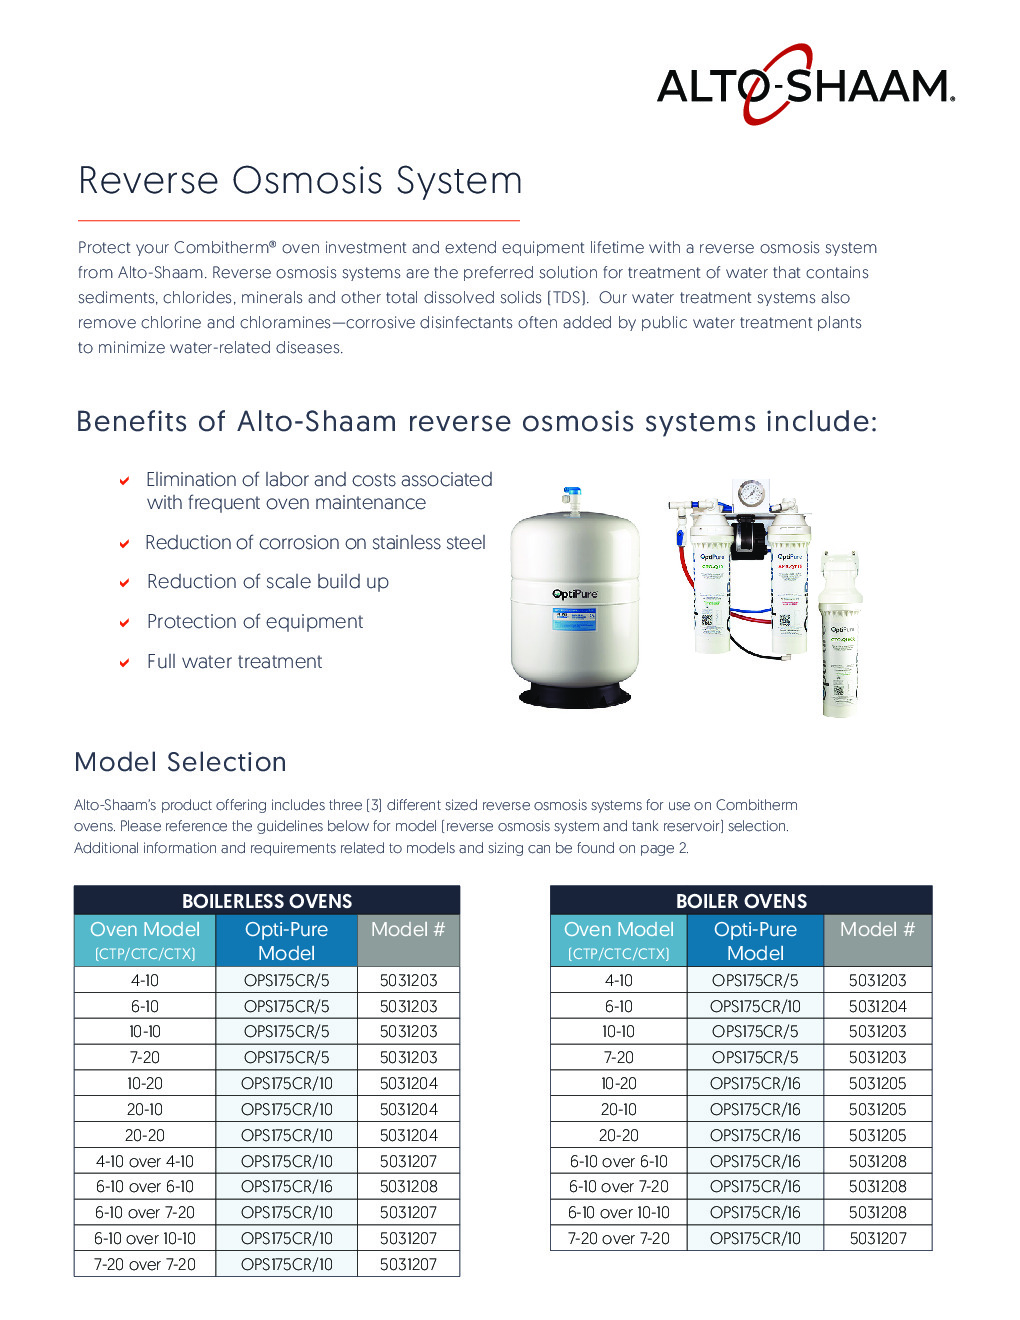 Alto-Shaam 5031203 Reverse Osmosis System